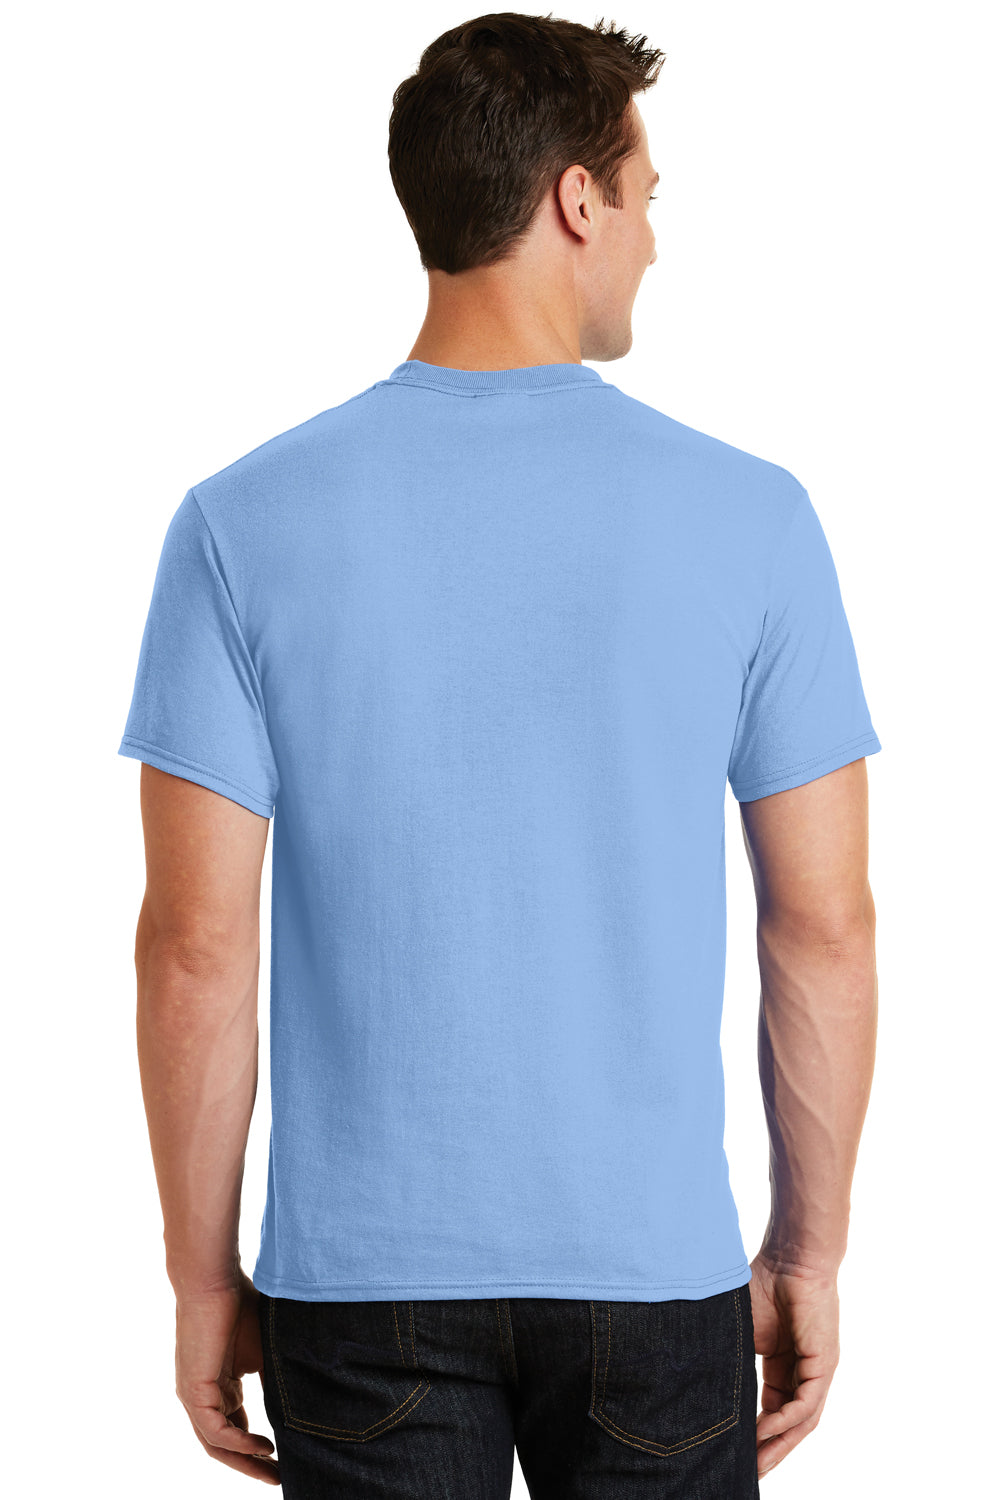 Port & Company PC55 Mens Core Short Sleeve Crewneck T-Shirt Light Blue Back